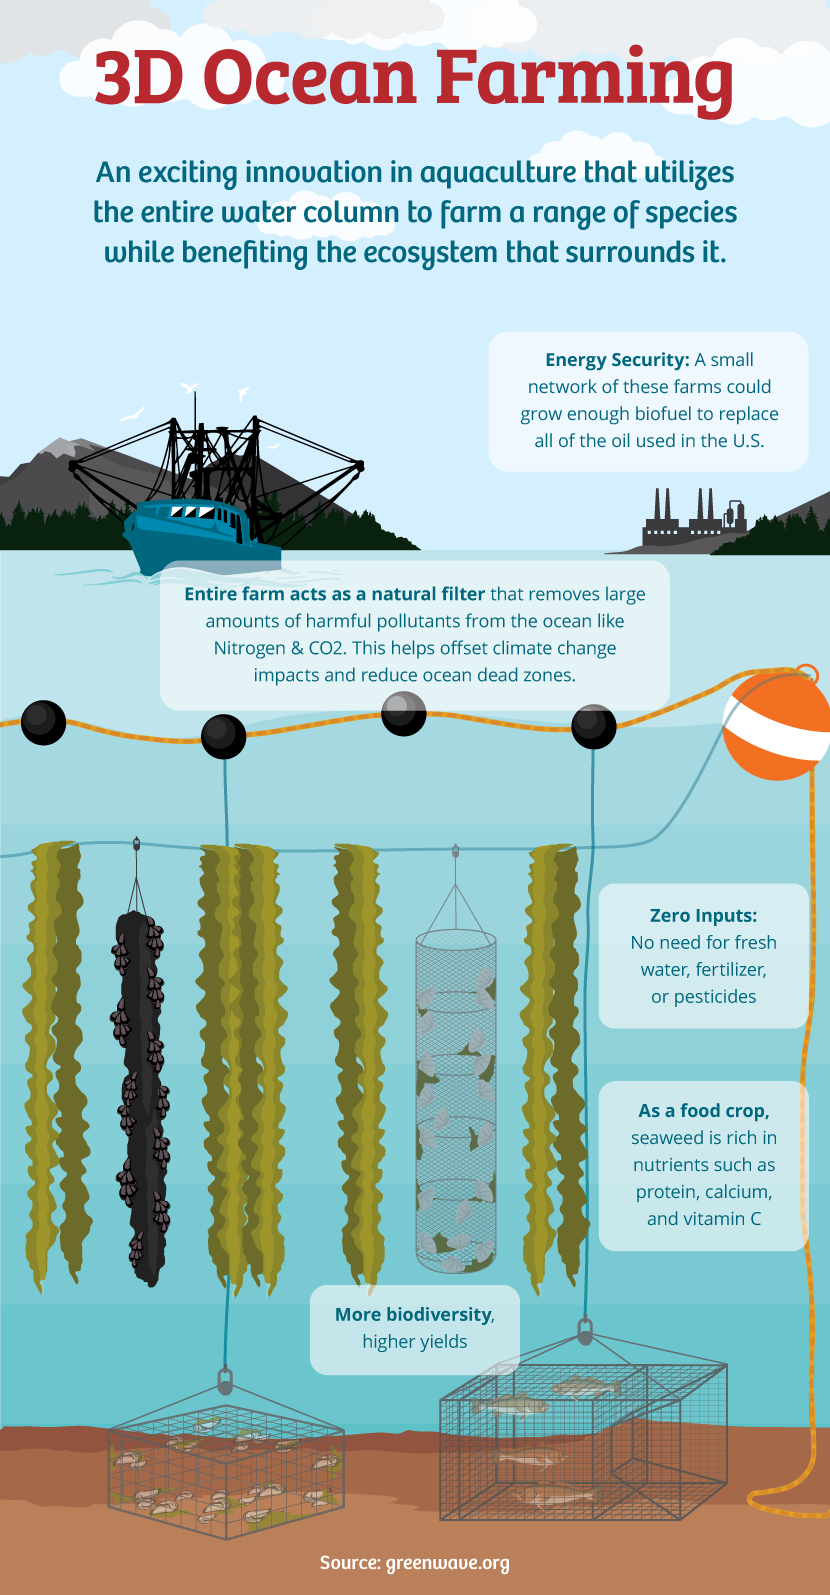 3D Ocean Farming - The Environmental Impact of Fish Farming